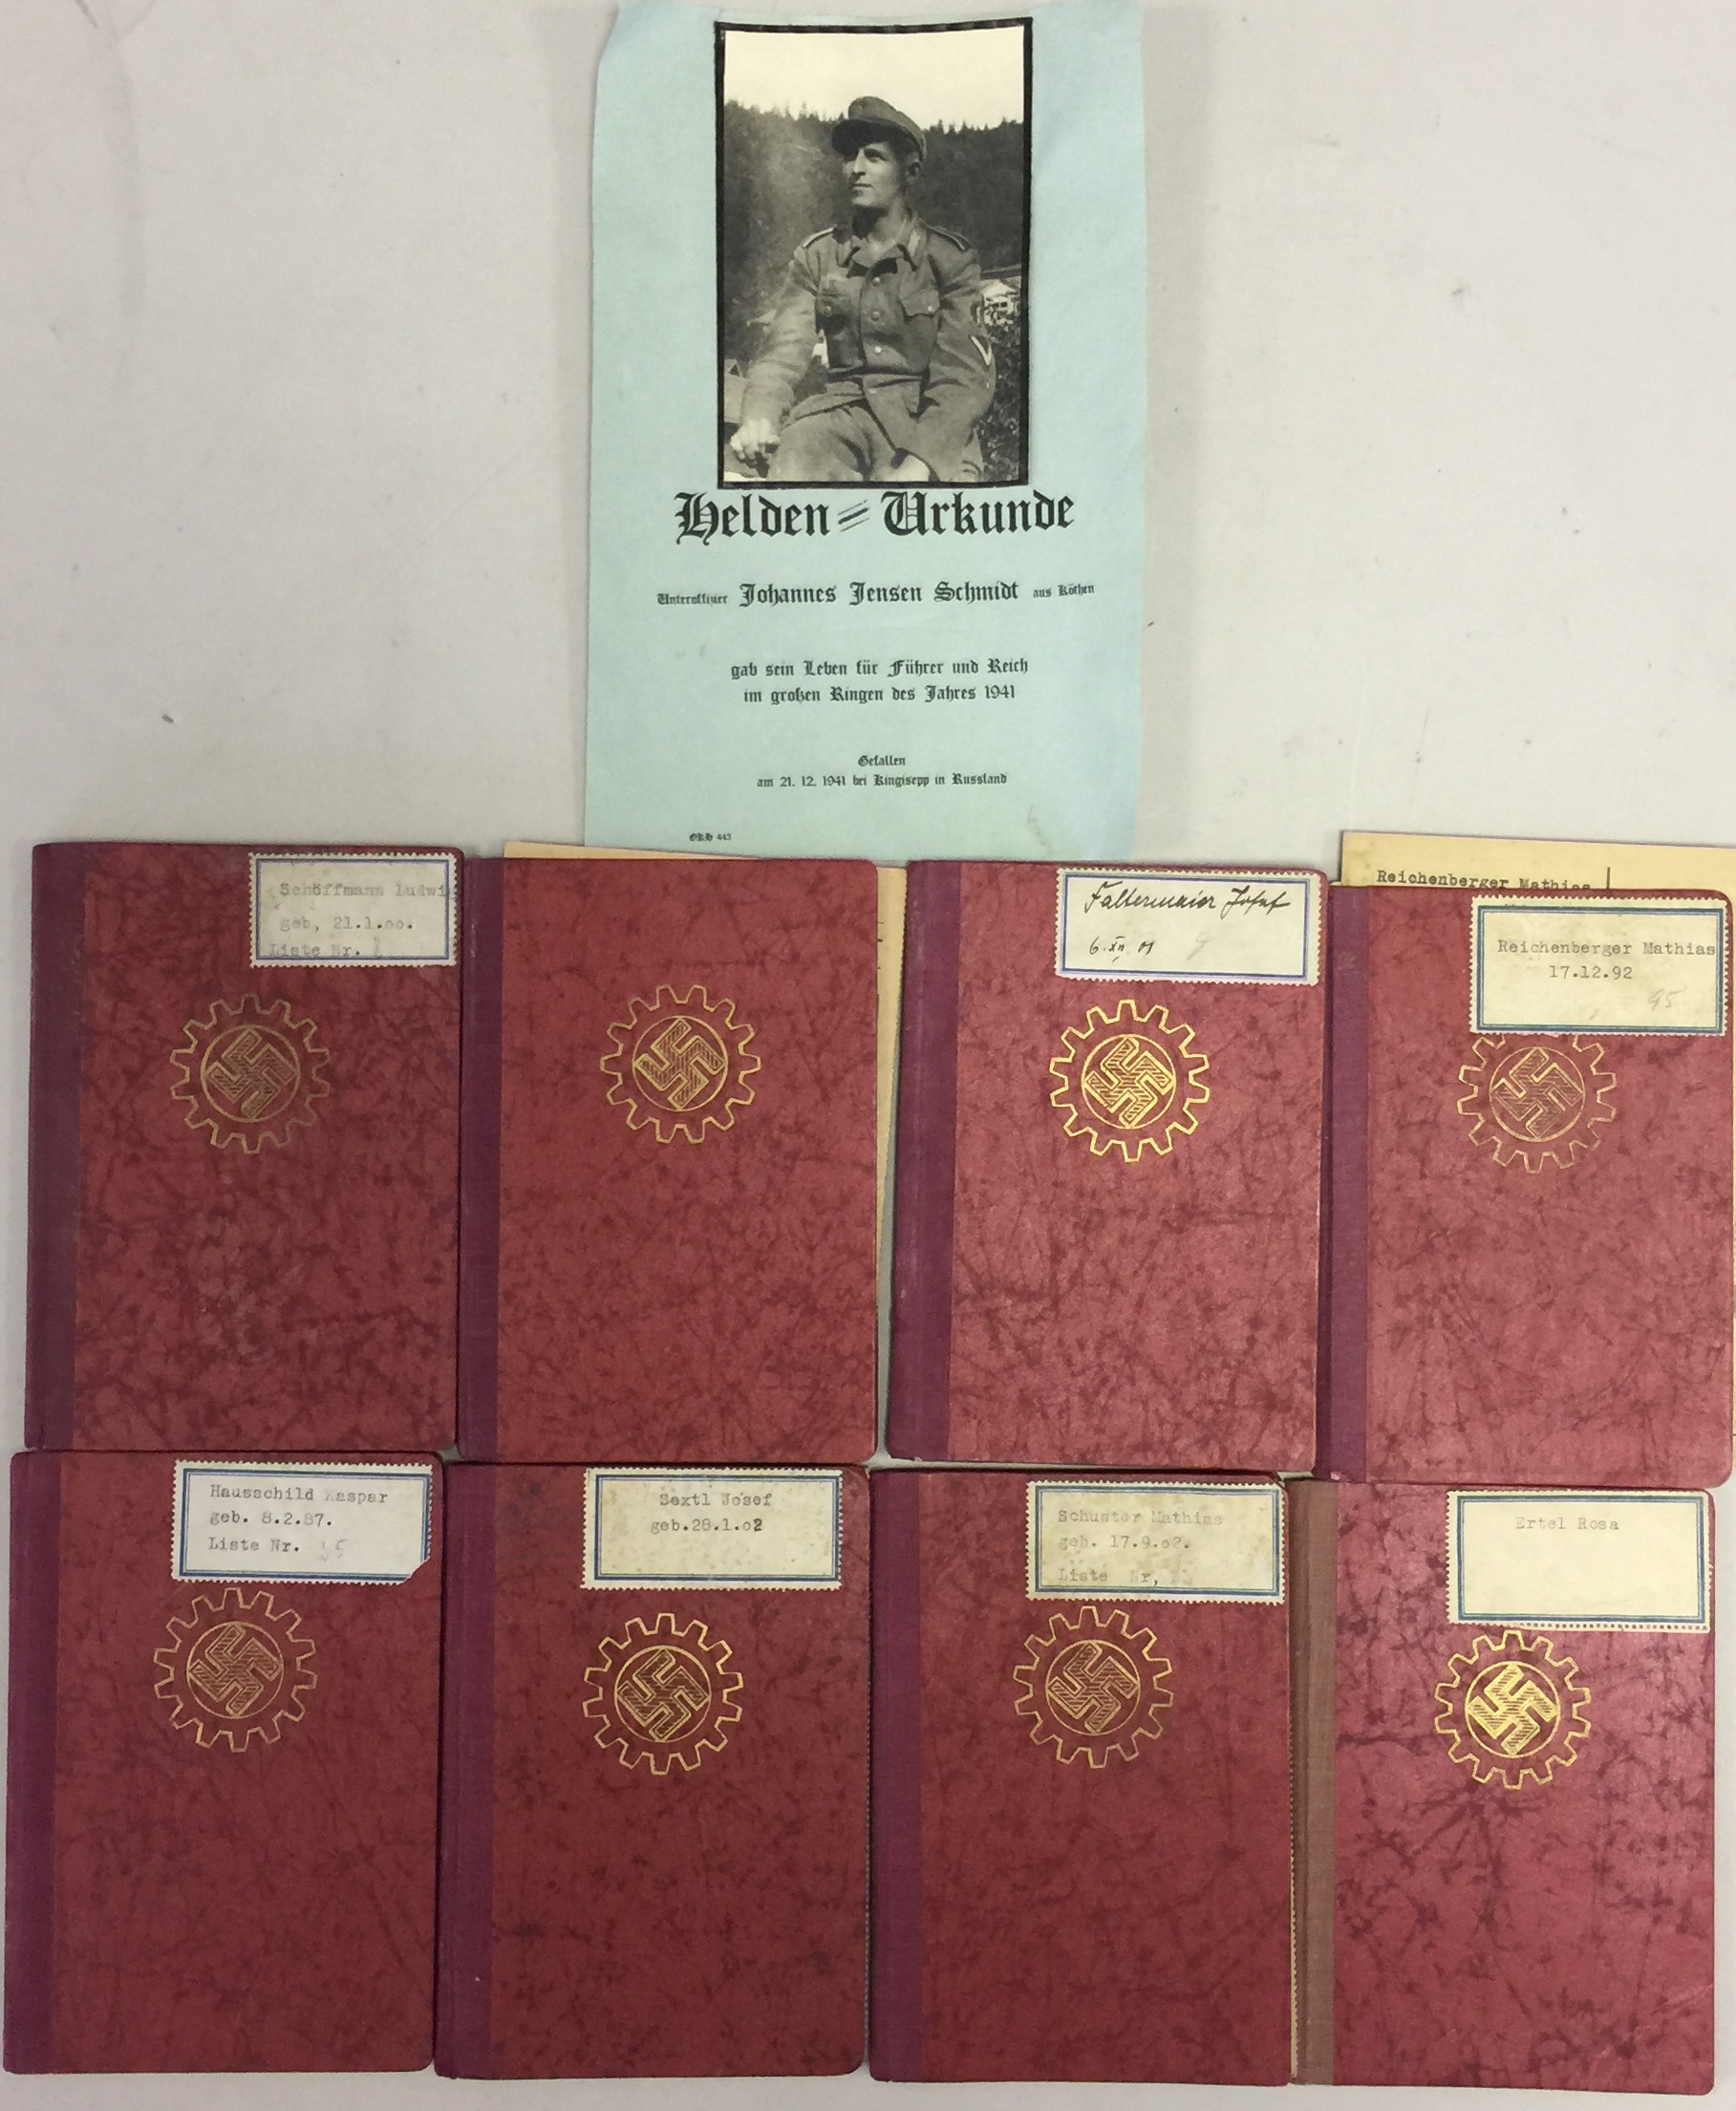 THIRD REICH MEMBERSHIP BOOKS AND DEATH NOTICE. 8 Third Reich "mitgliedsbuchs" dating from 1934-1938.